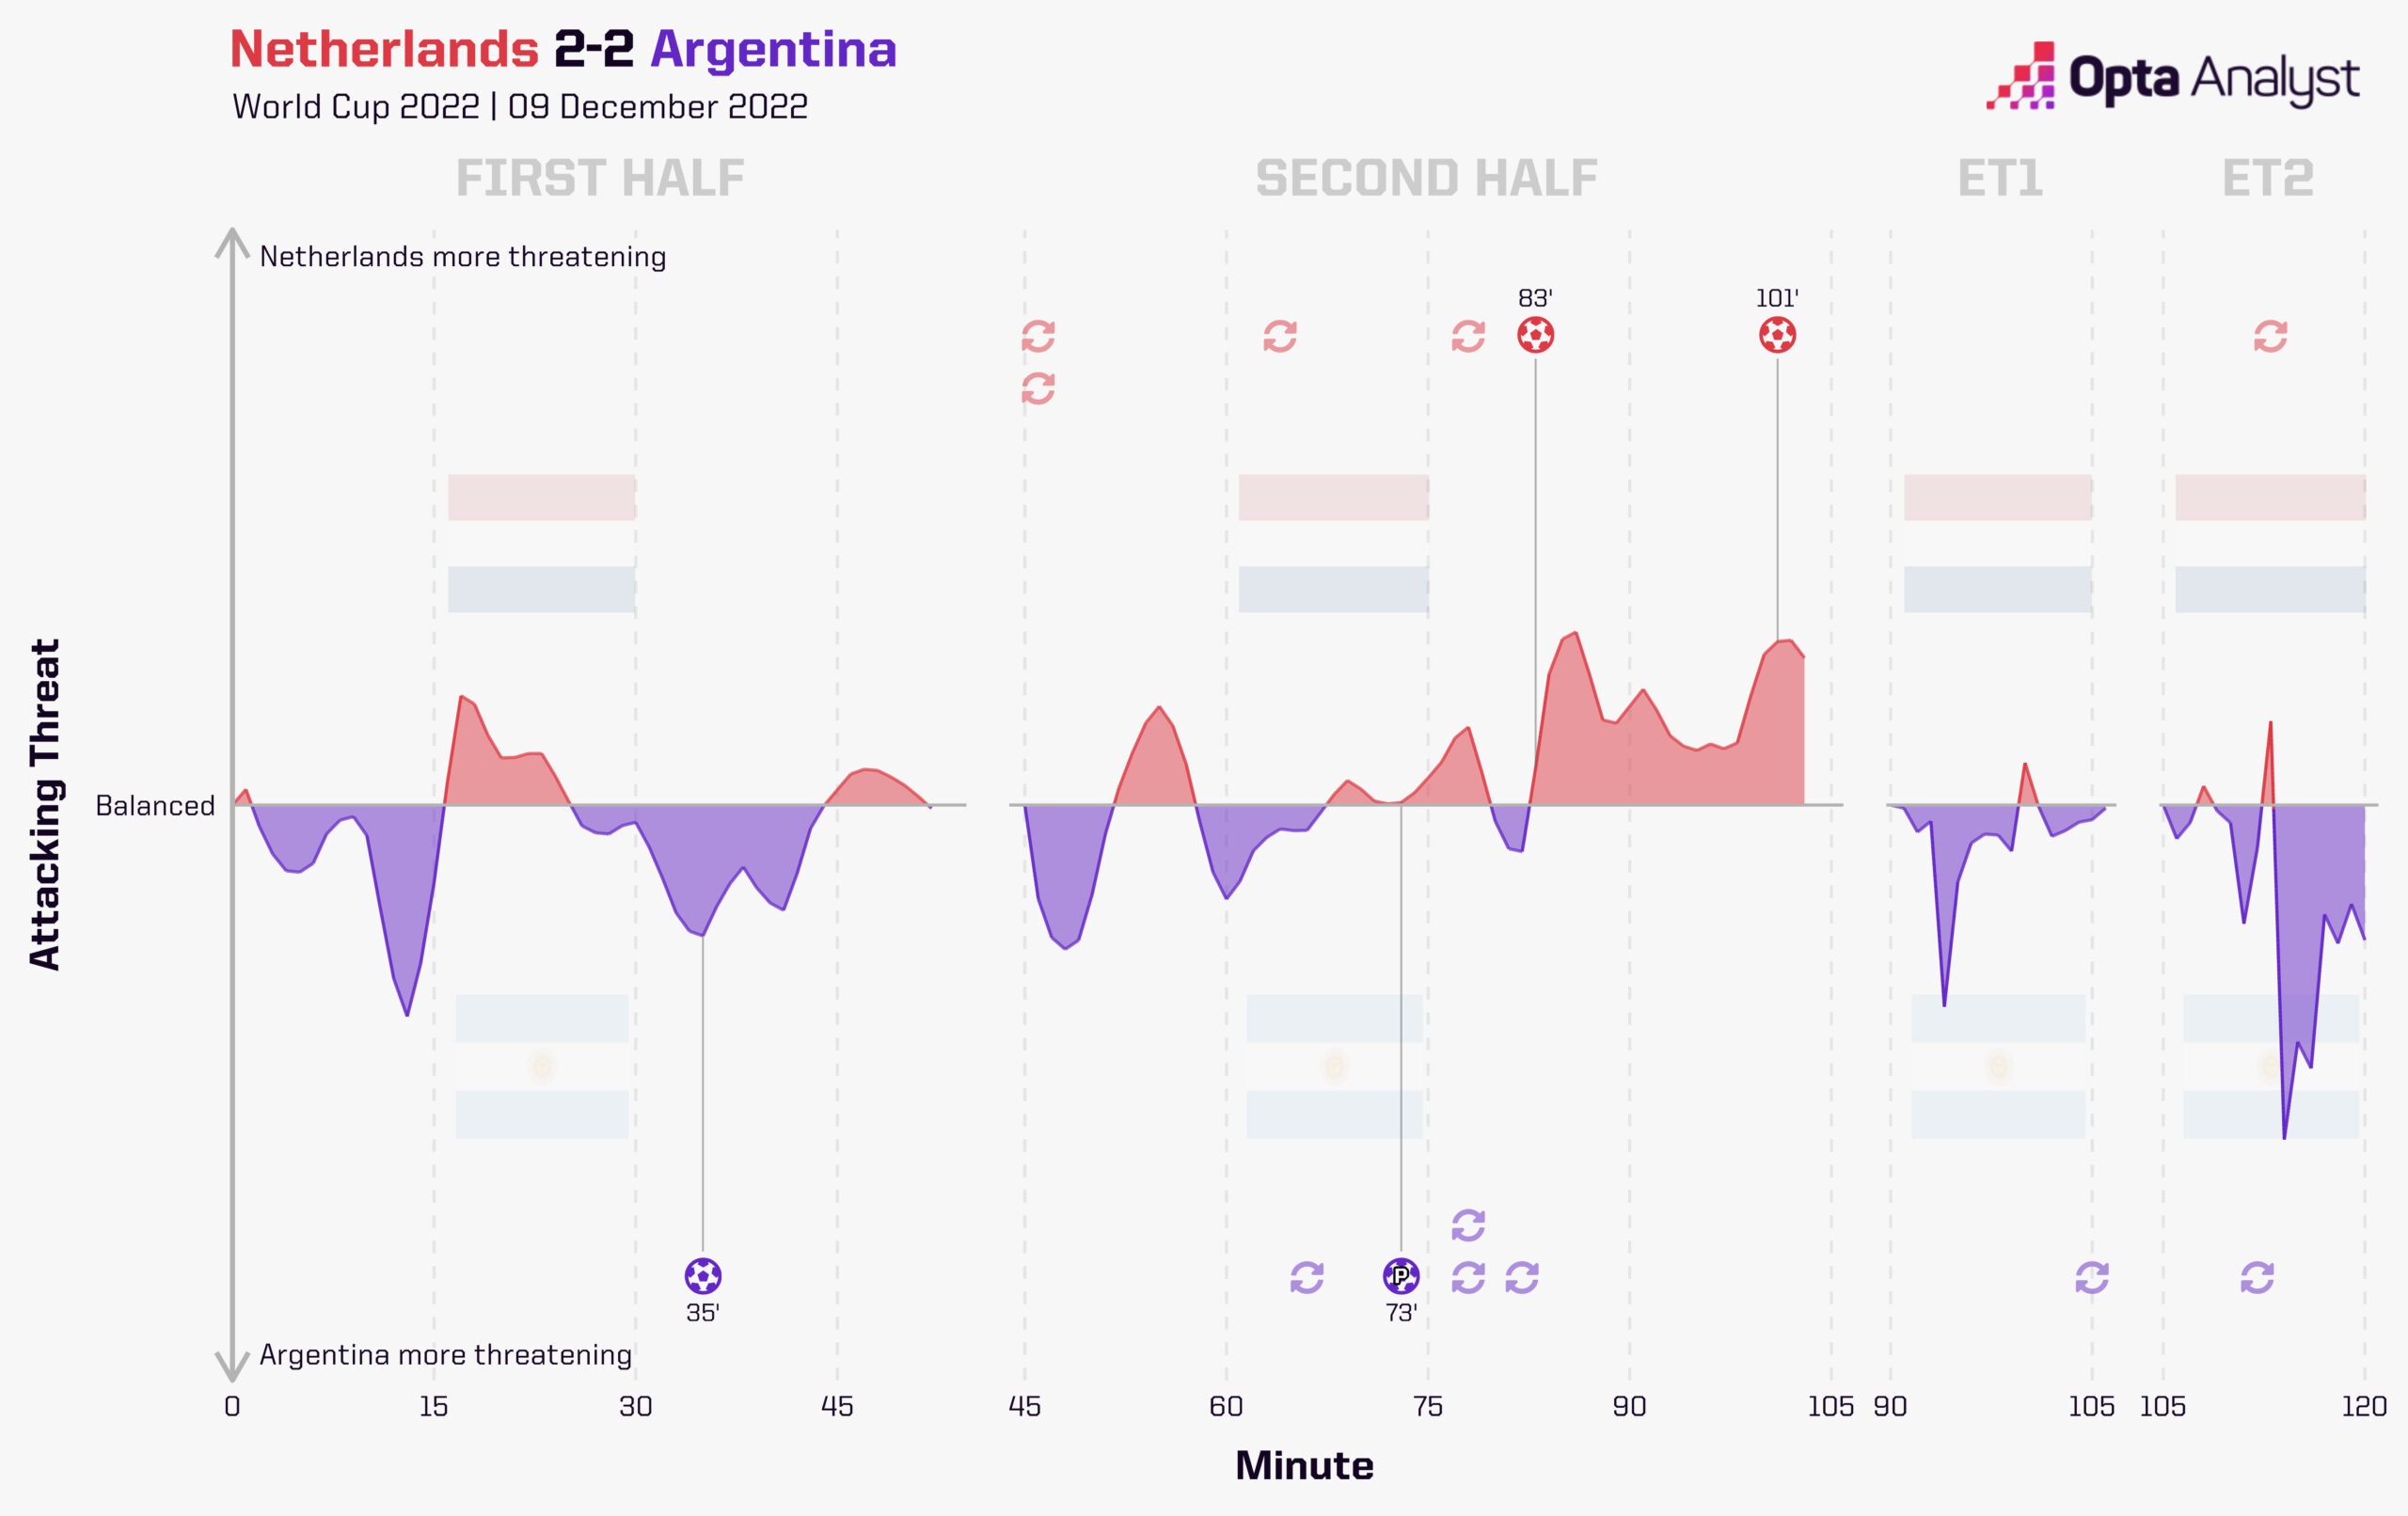 Netherlands 2-2 Argentina Momentum